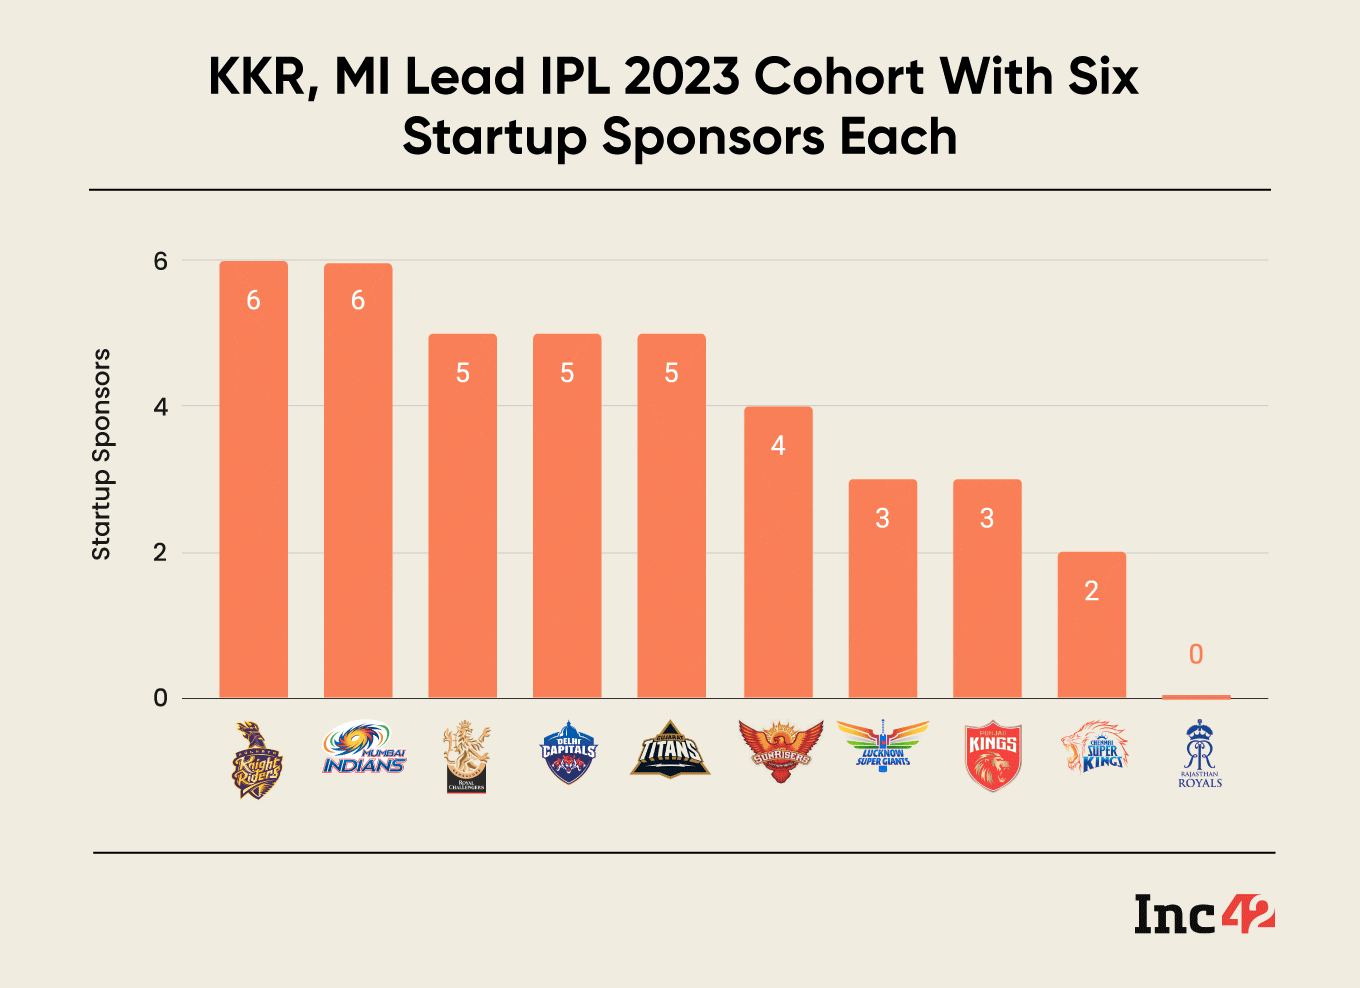 KKR, MI partner with six startups each in IPL 2023